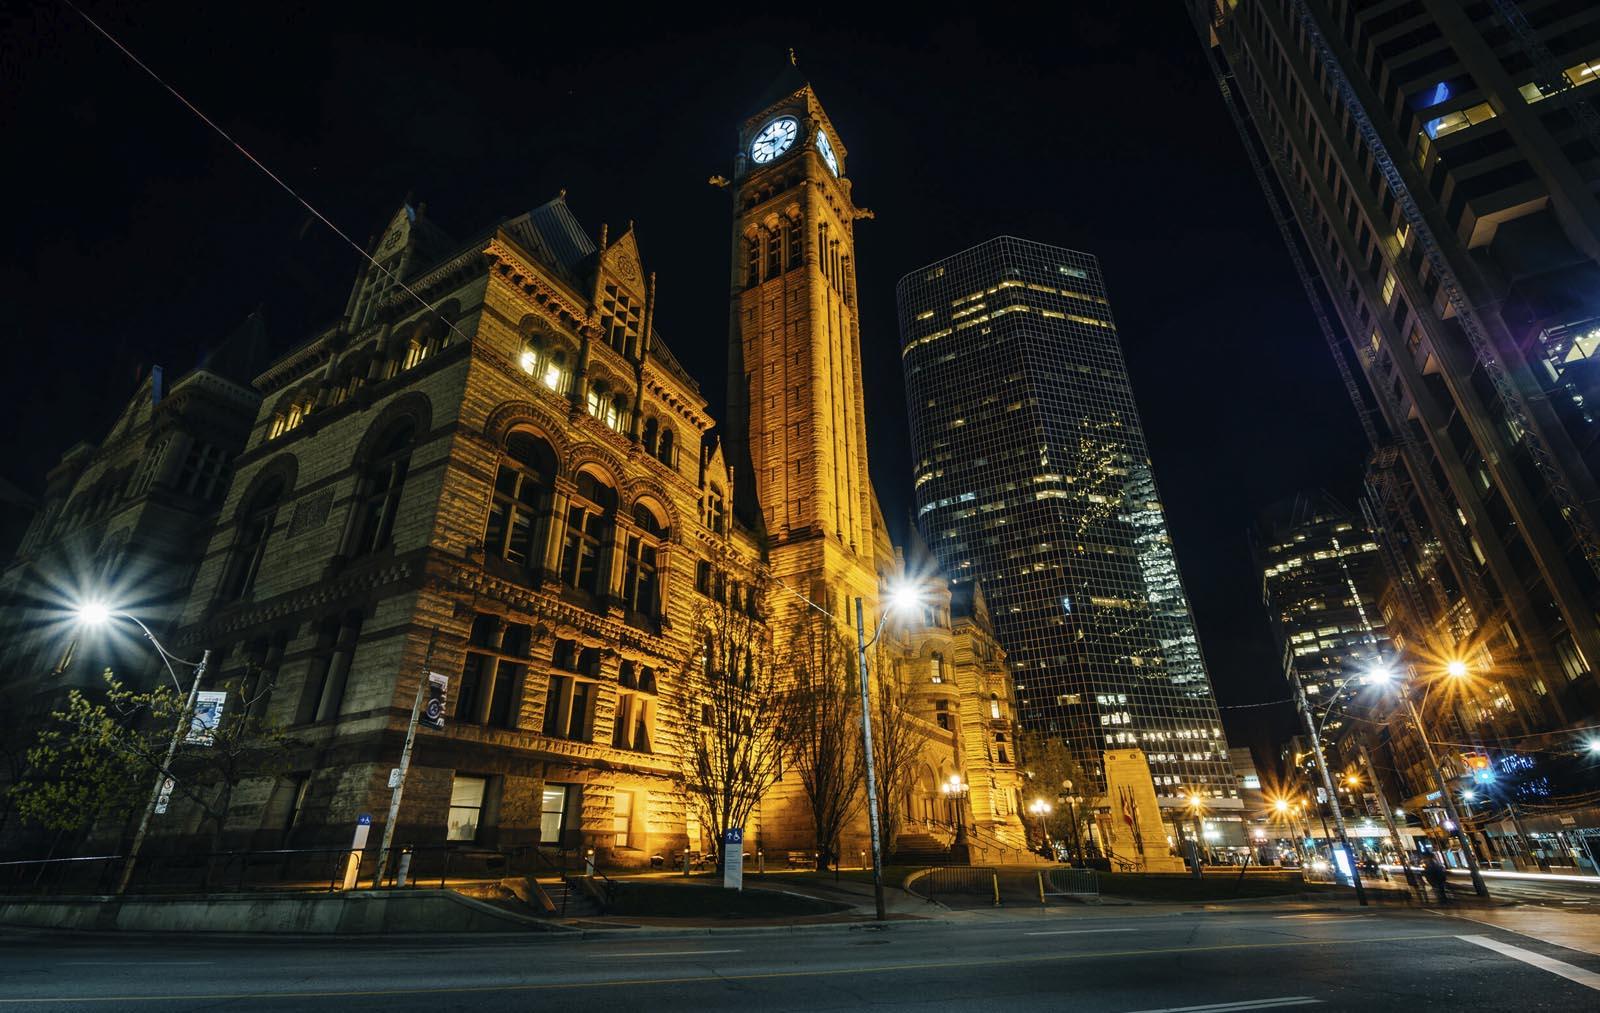 Old City hall at night, Toronto